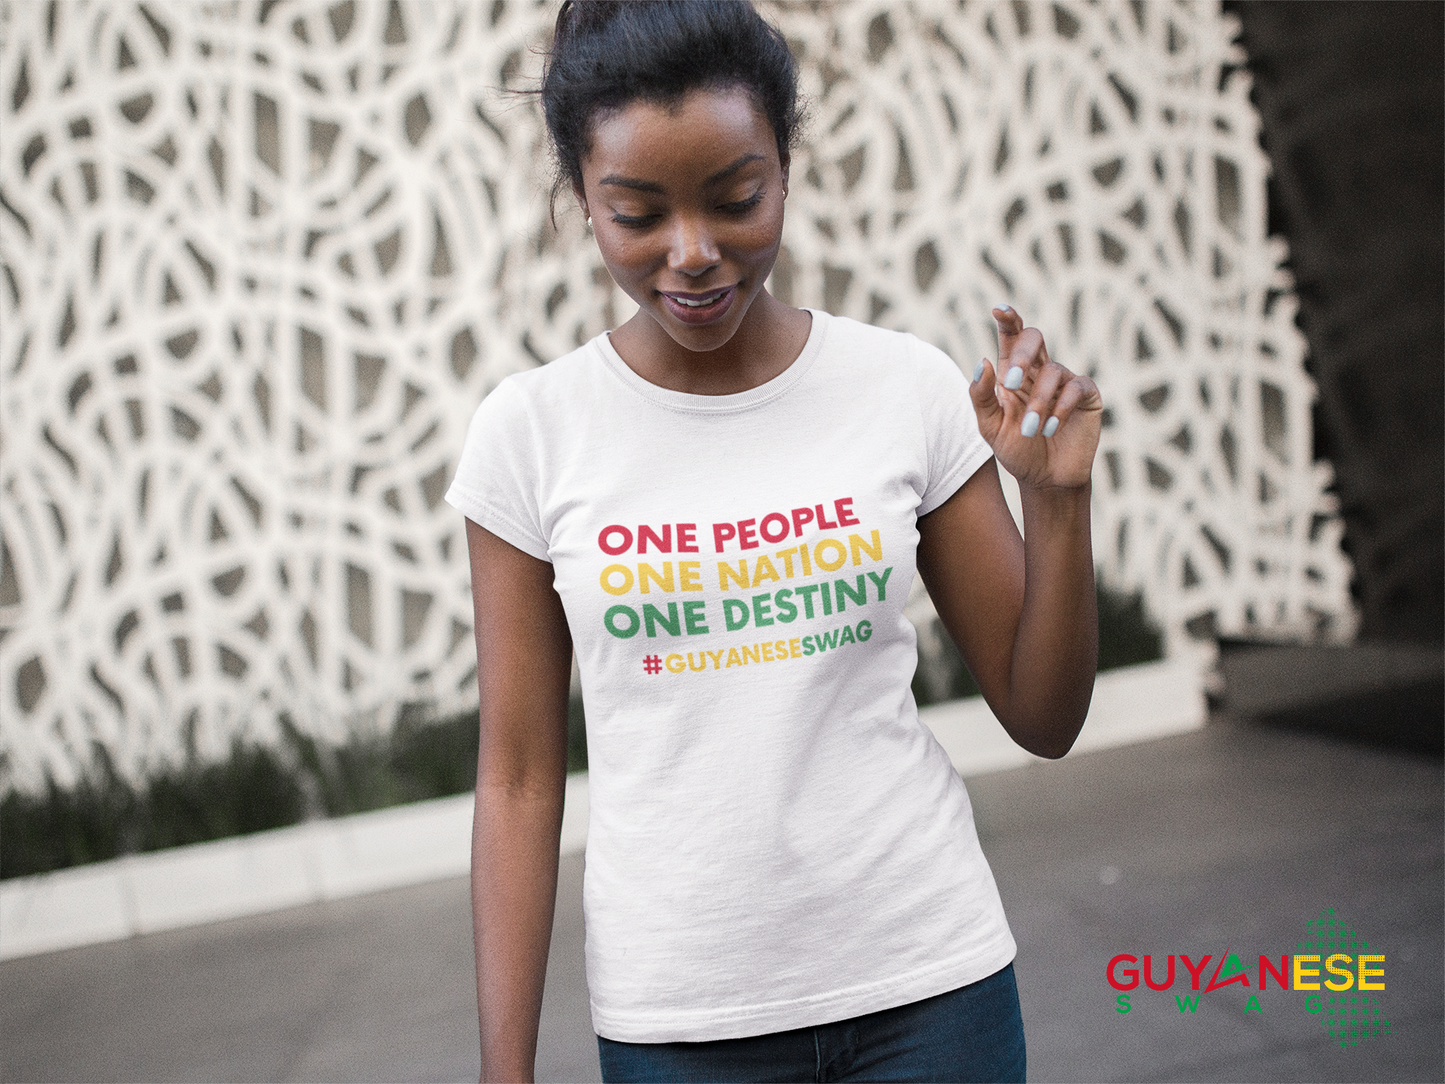 Guyana Motto "One People One Nation One Destiny" Women's Tee - White